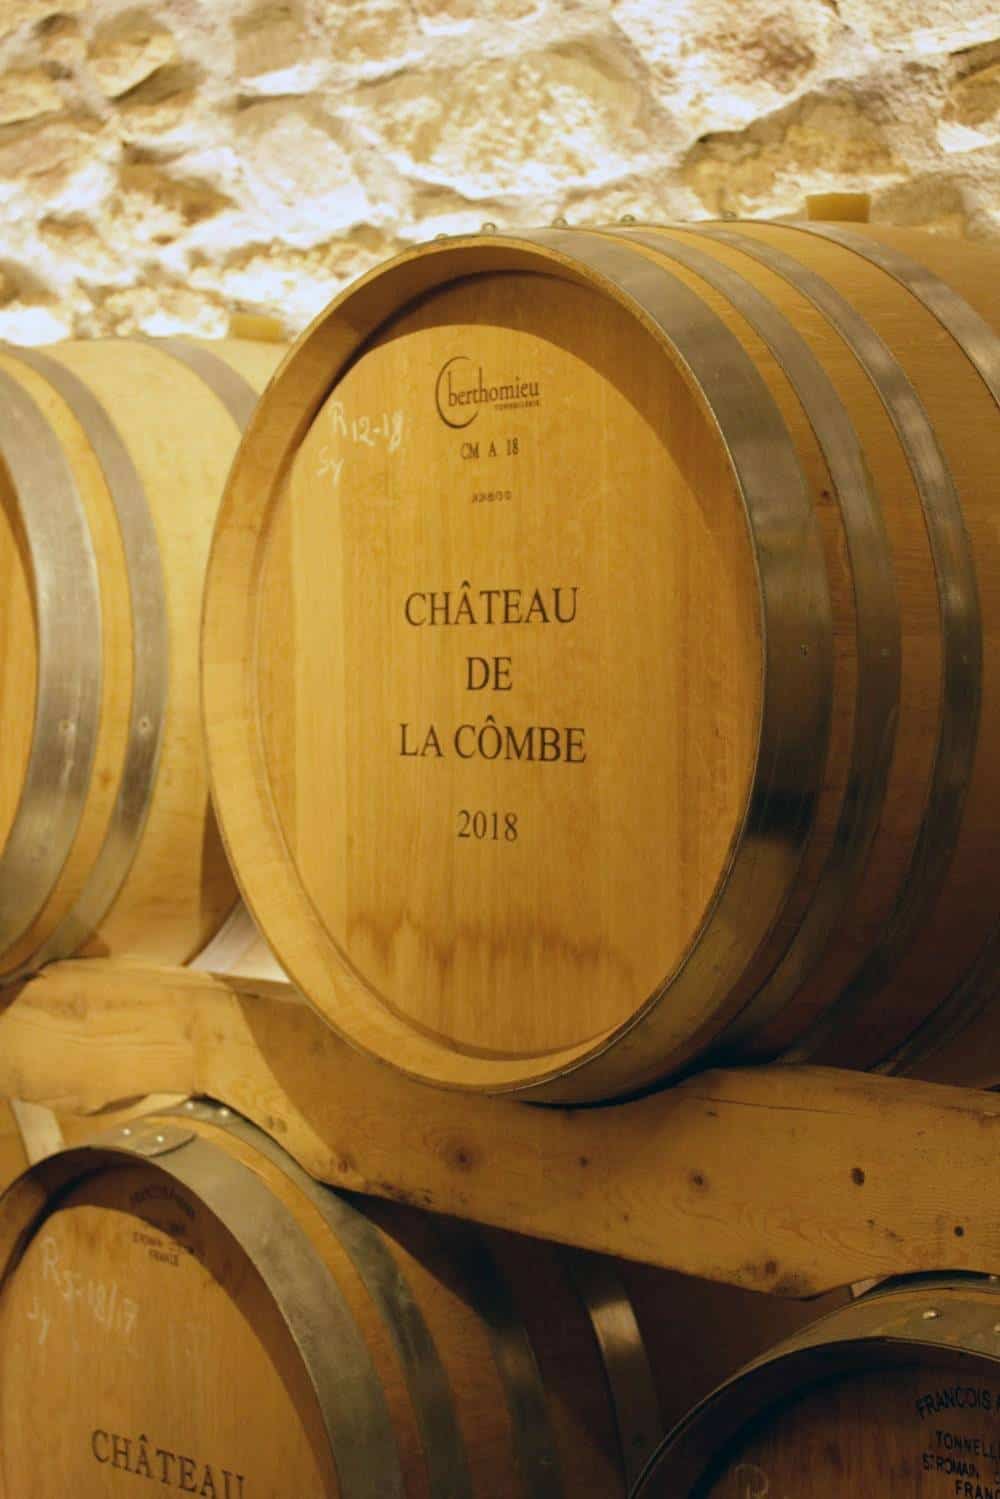 Chateau-de-La-Combe-wine-aging-in-barrels